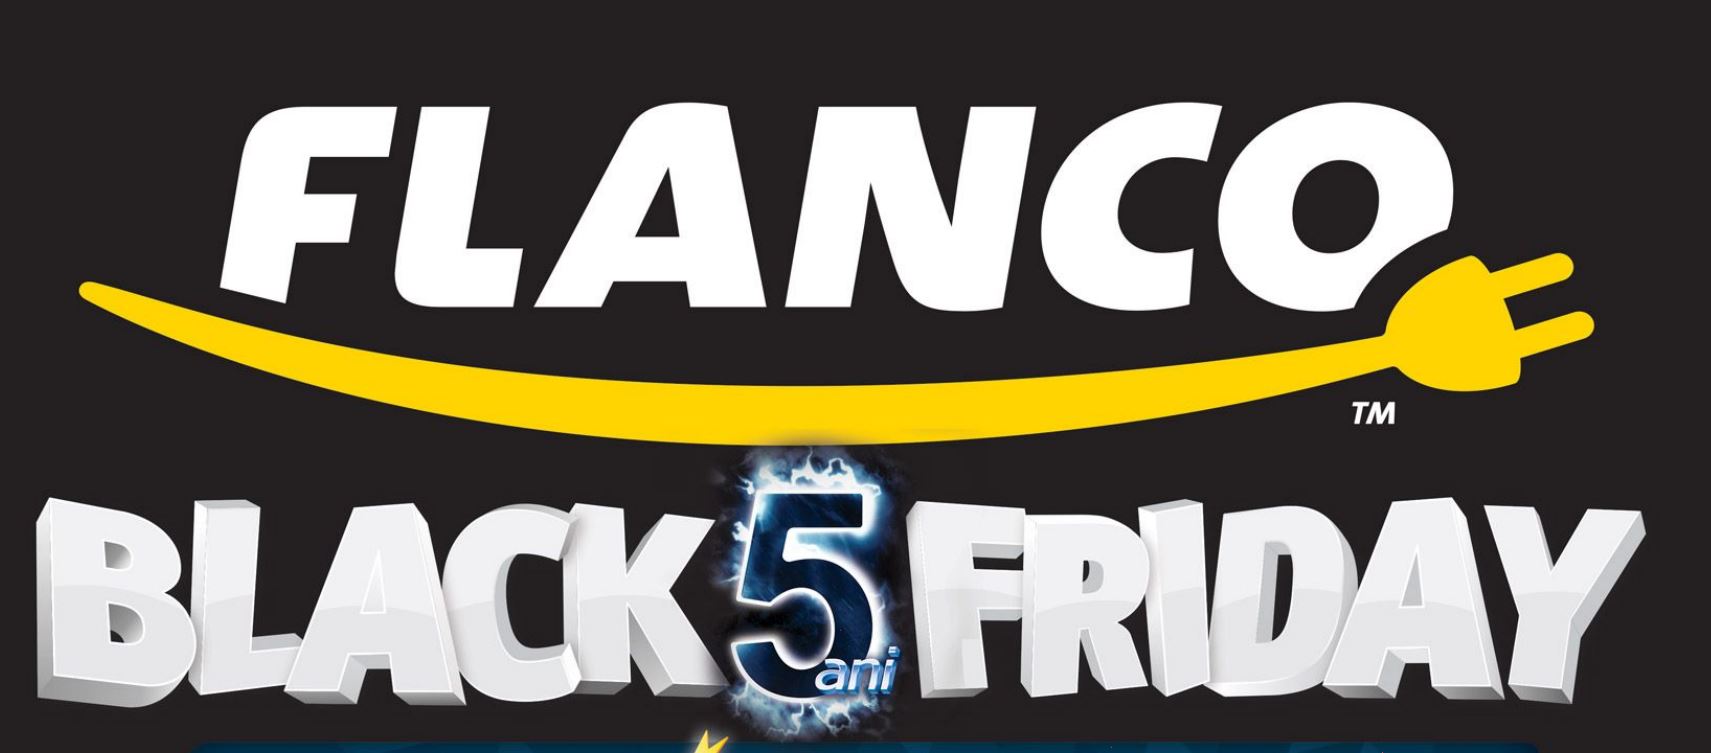 Flanco Black Friday 2015 rabatkatalog